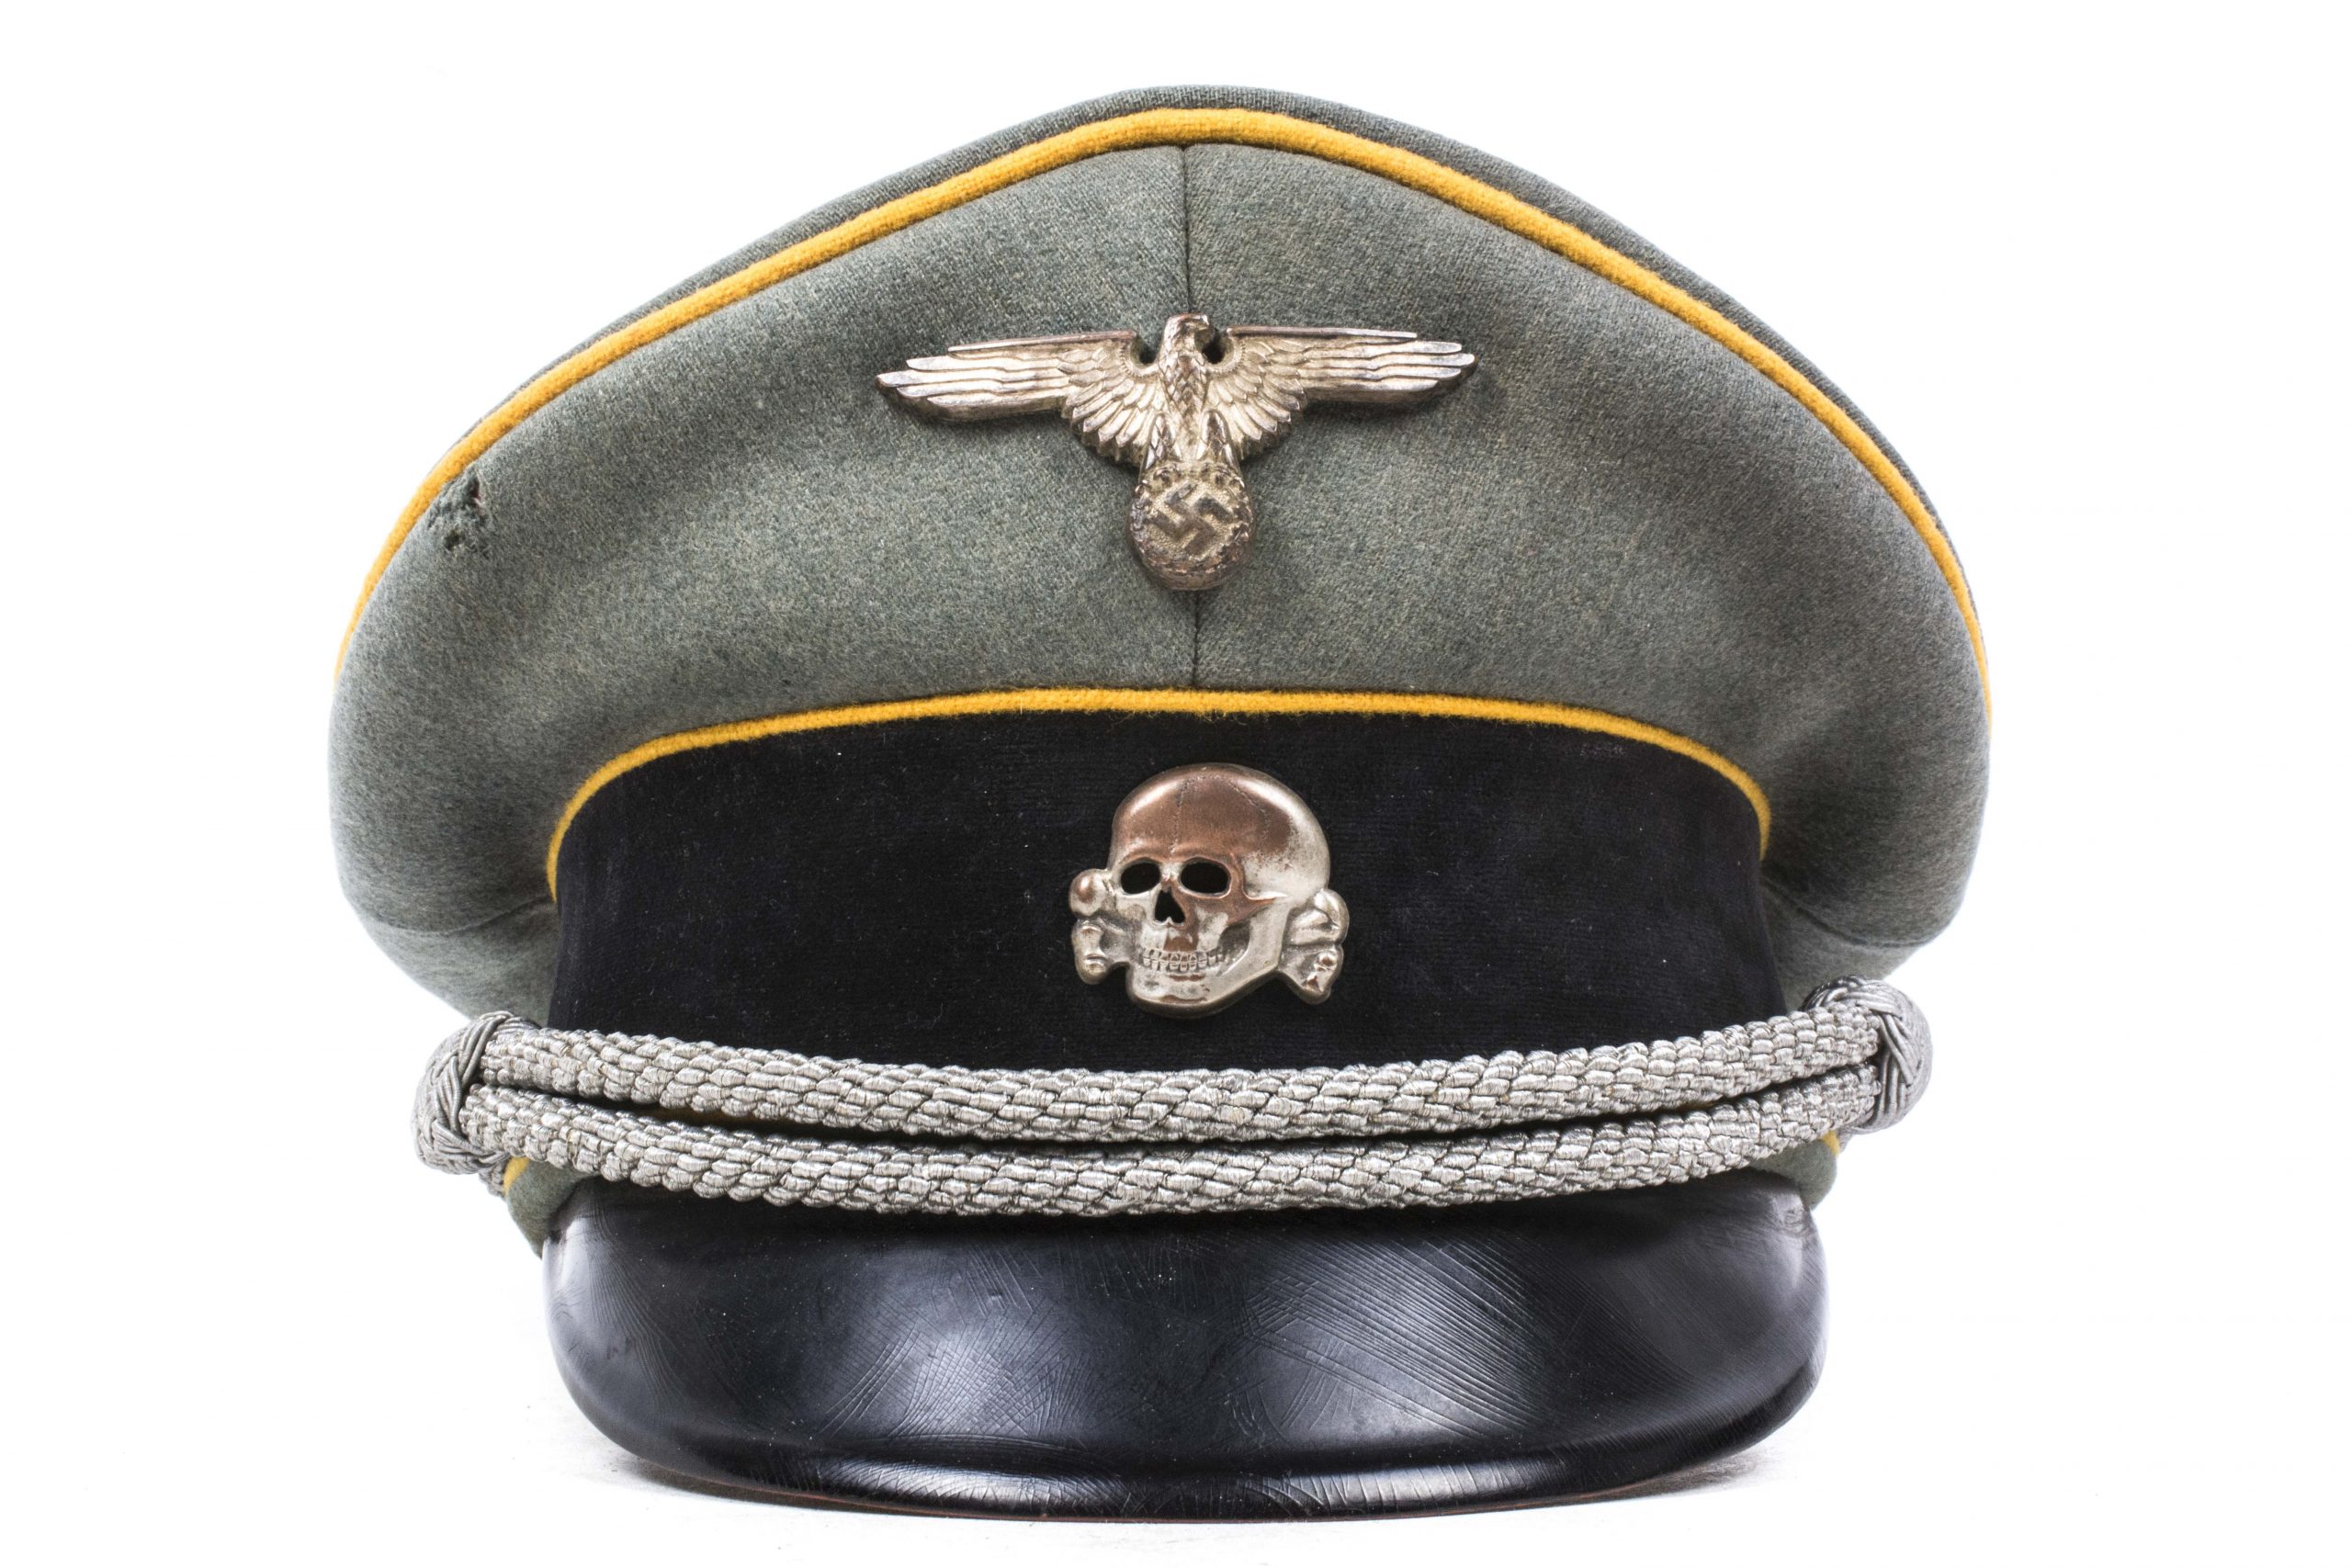 Superb branch piped Waffen-ss officers visor cap for Kavalerie – fjm44